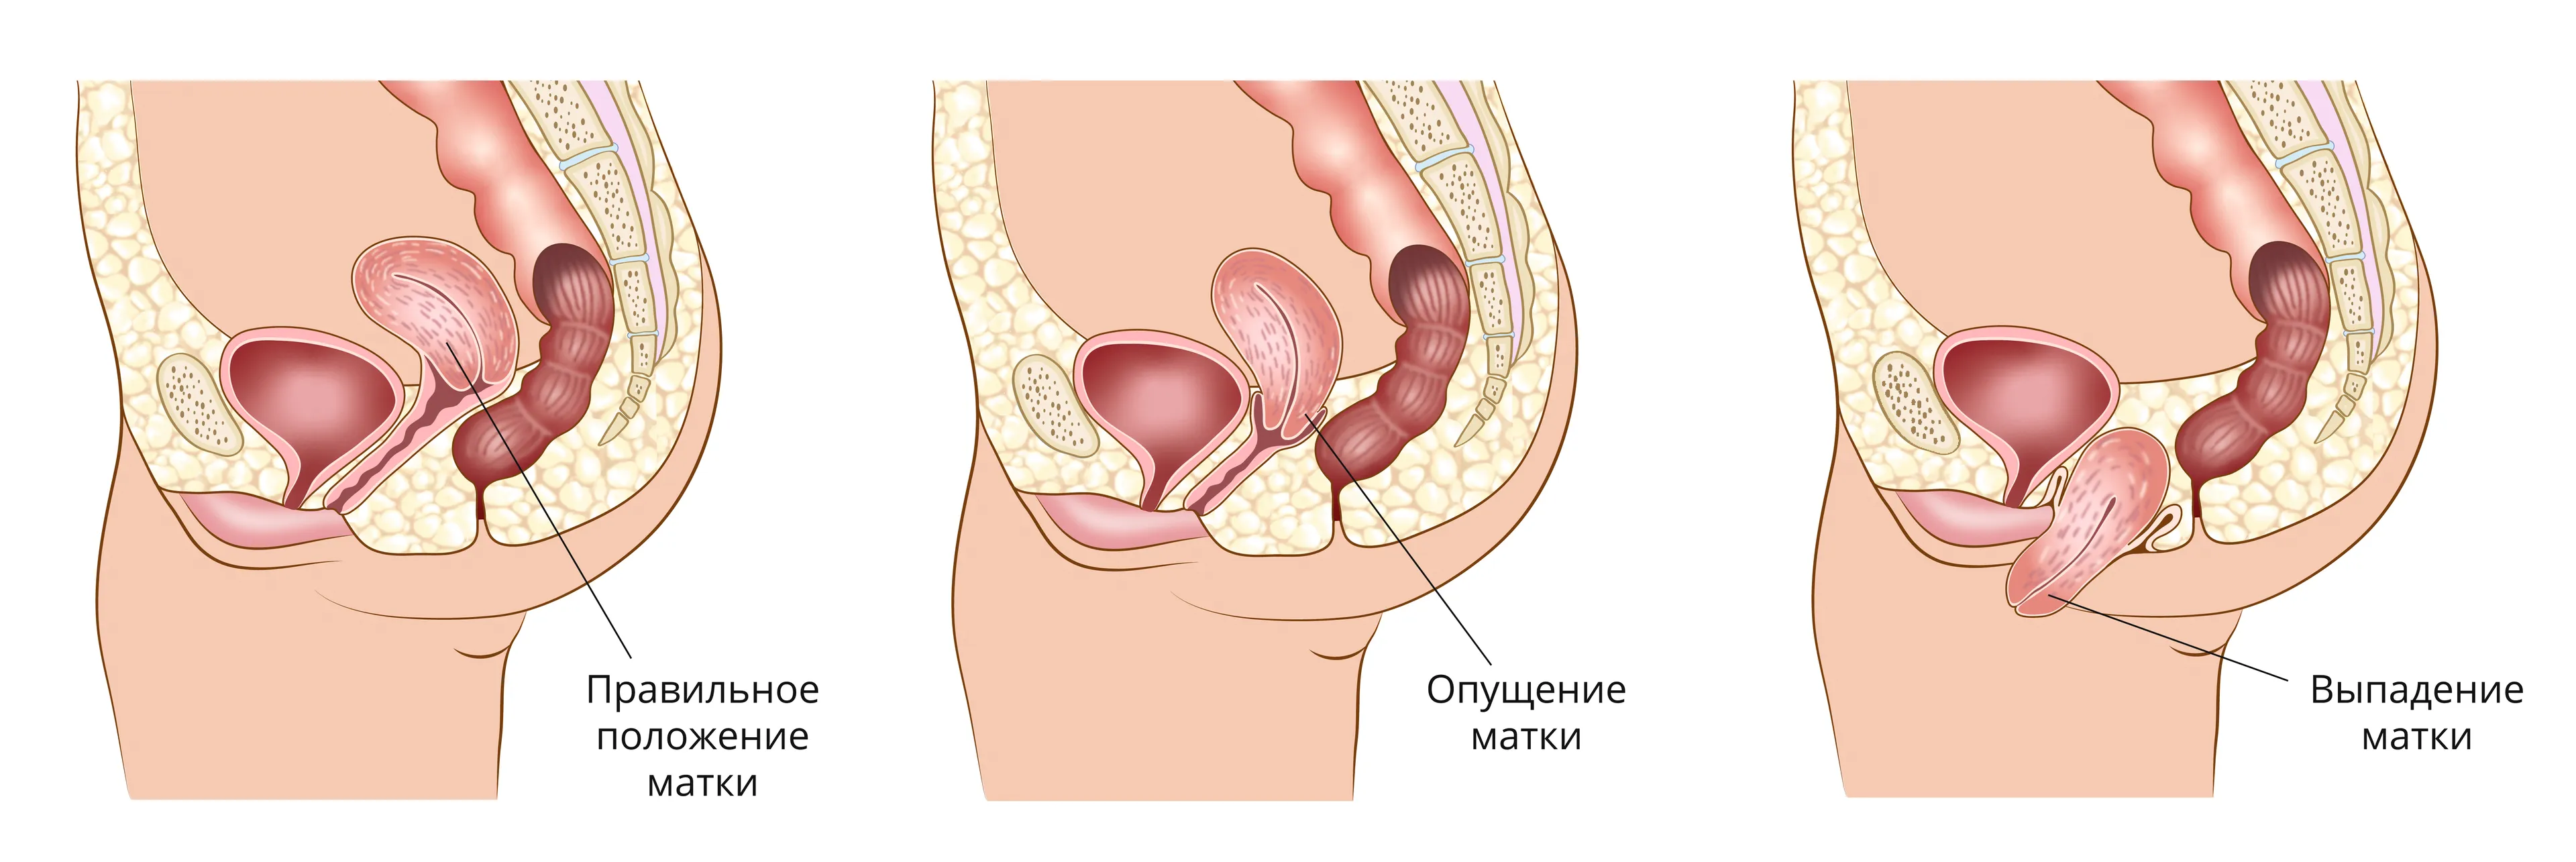 оргазм и гипертонус матки при беременности фото 16